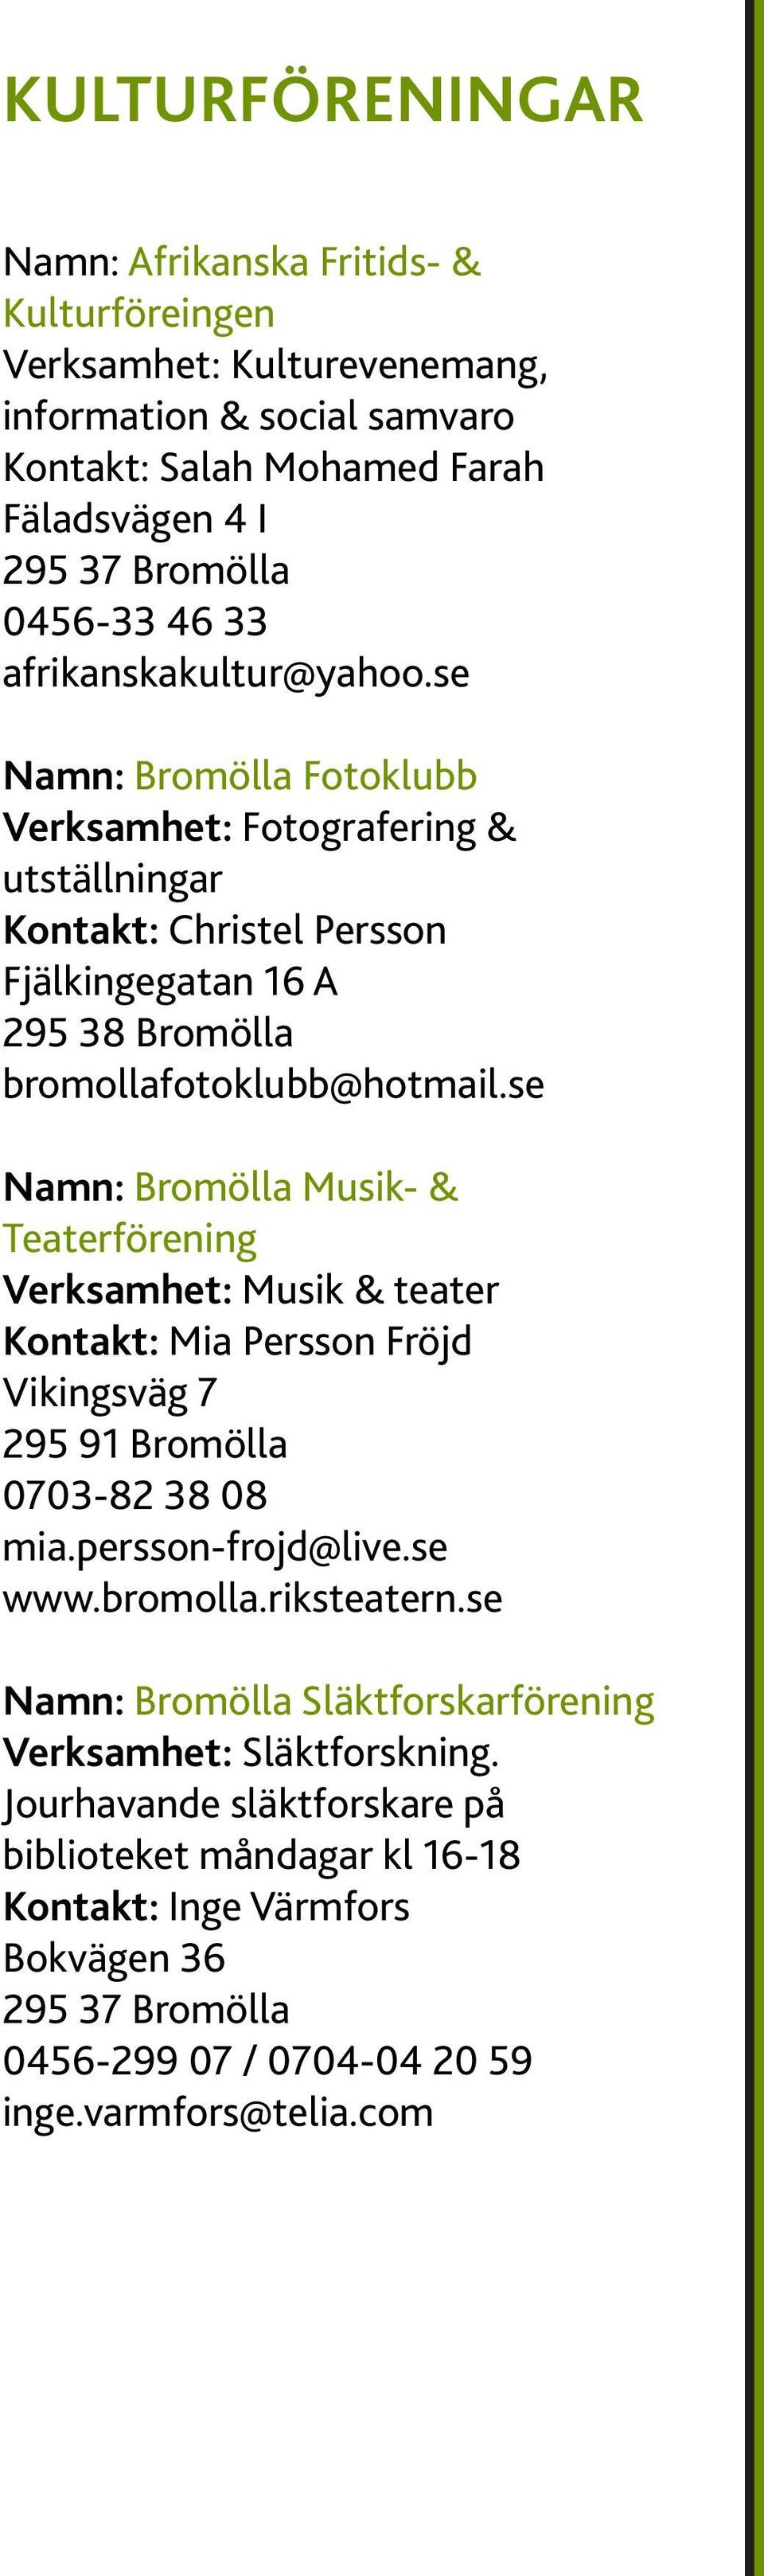 se Namn: Bromölla Musik- & Teaterförening Verksamhet: Musik & teater Kontakt: Mia Persson Fröjd Vikingsväg 7 295 91 Bromölla 0703-82 38 08 mia.persson-frojd@live.se www.bromolla.riksteatern.